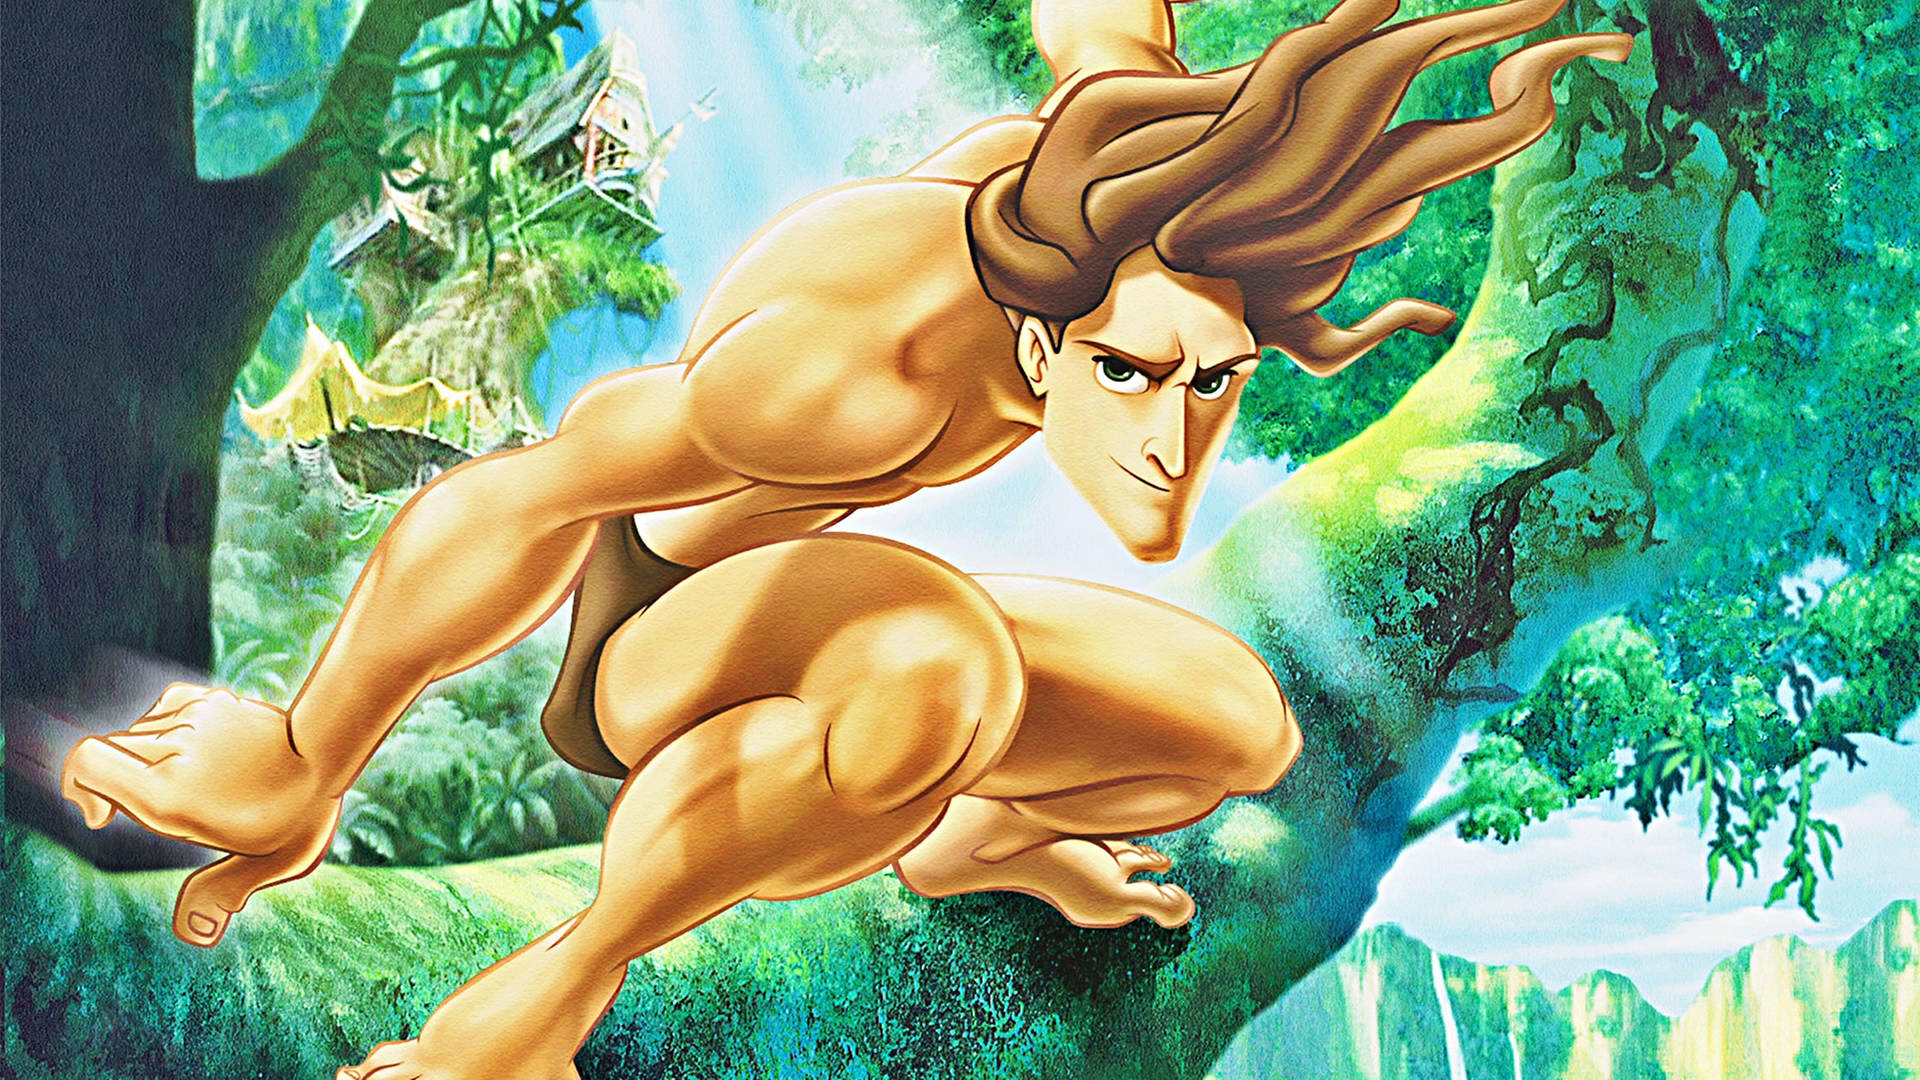 Free Tarzan Wallpaper Downloads, [100+] Tarzan Wallpapers for FREE |  